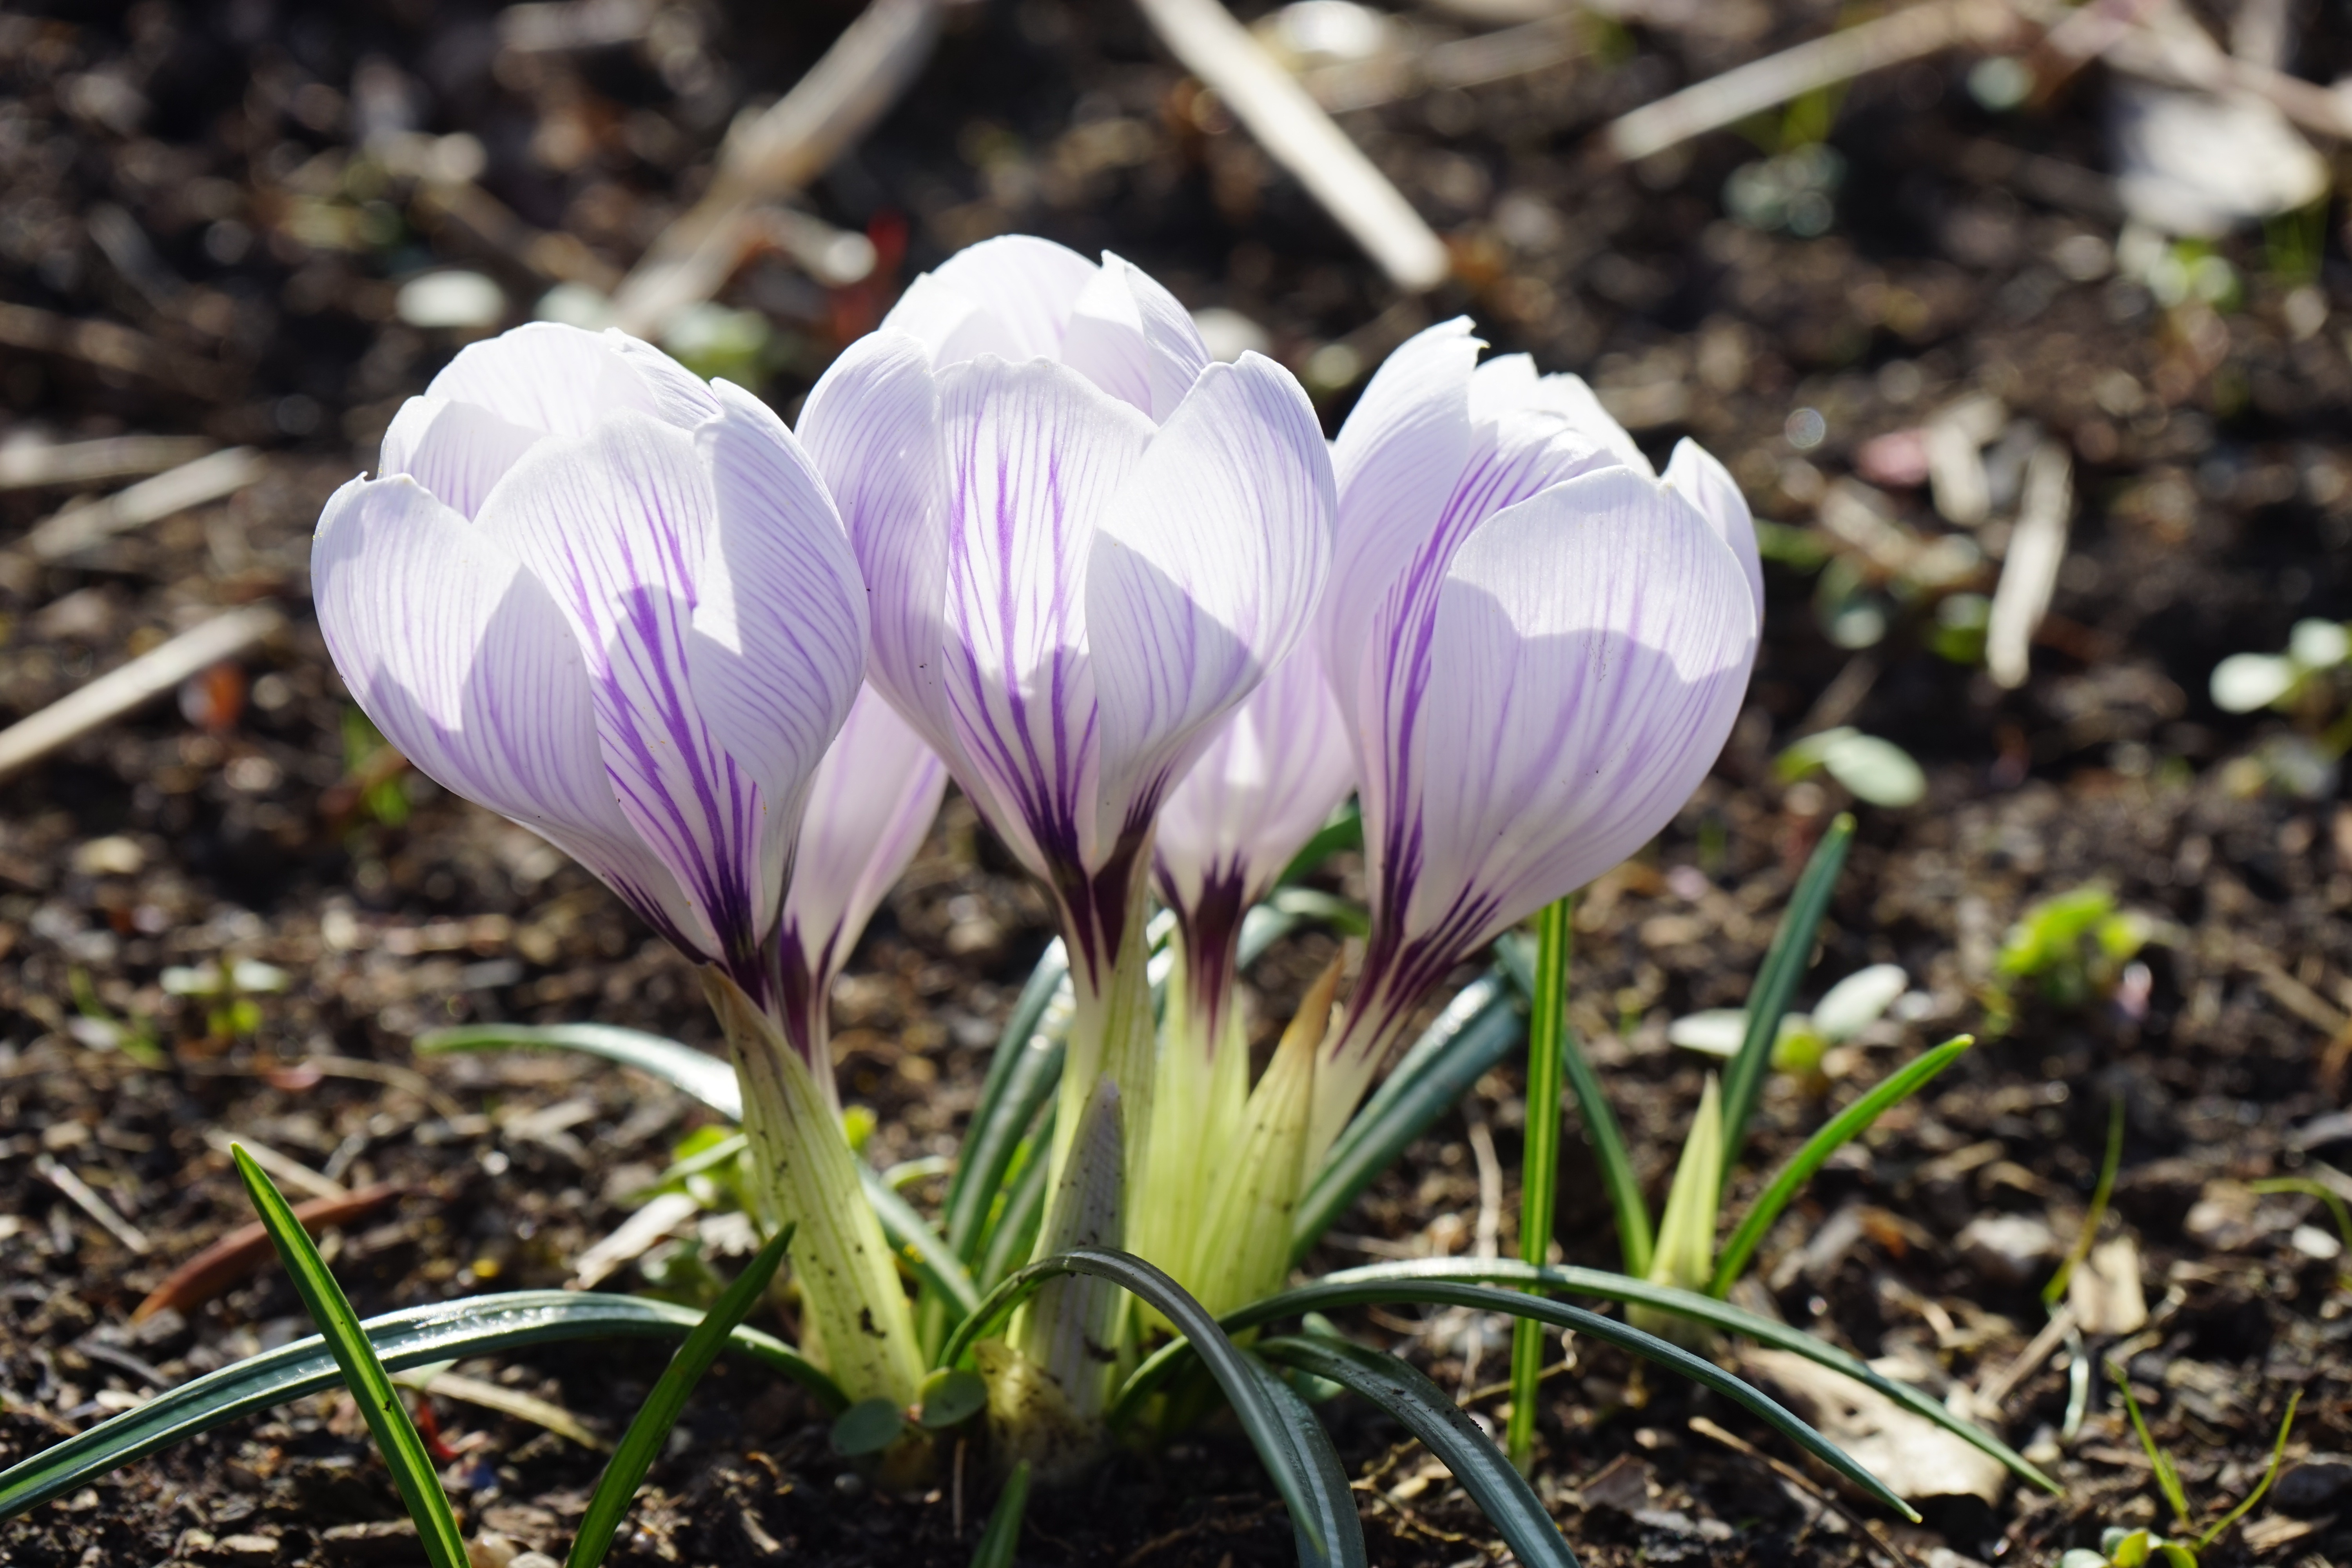 white and purple crocus flowers